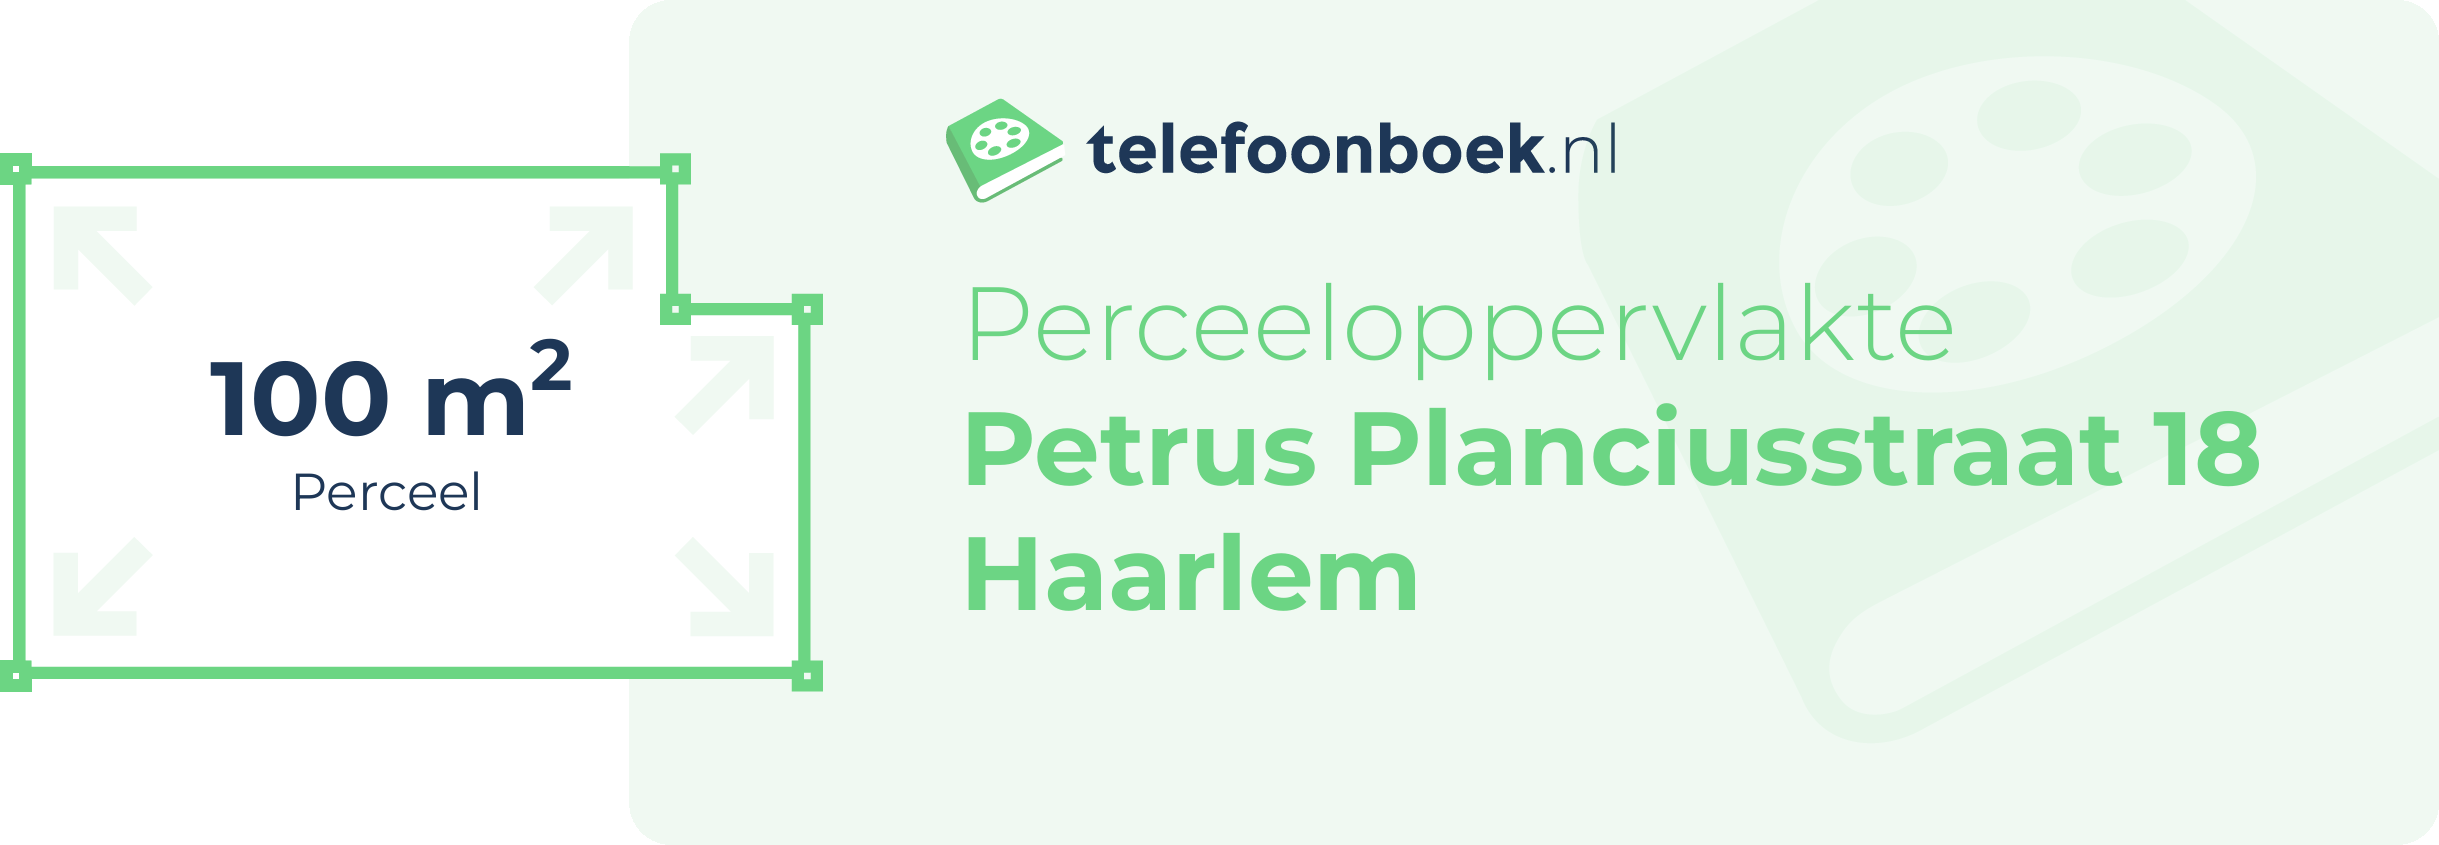 Perceeloppervlakte Petrus Planciusstraat 18 Haarlem